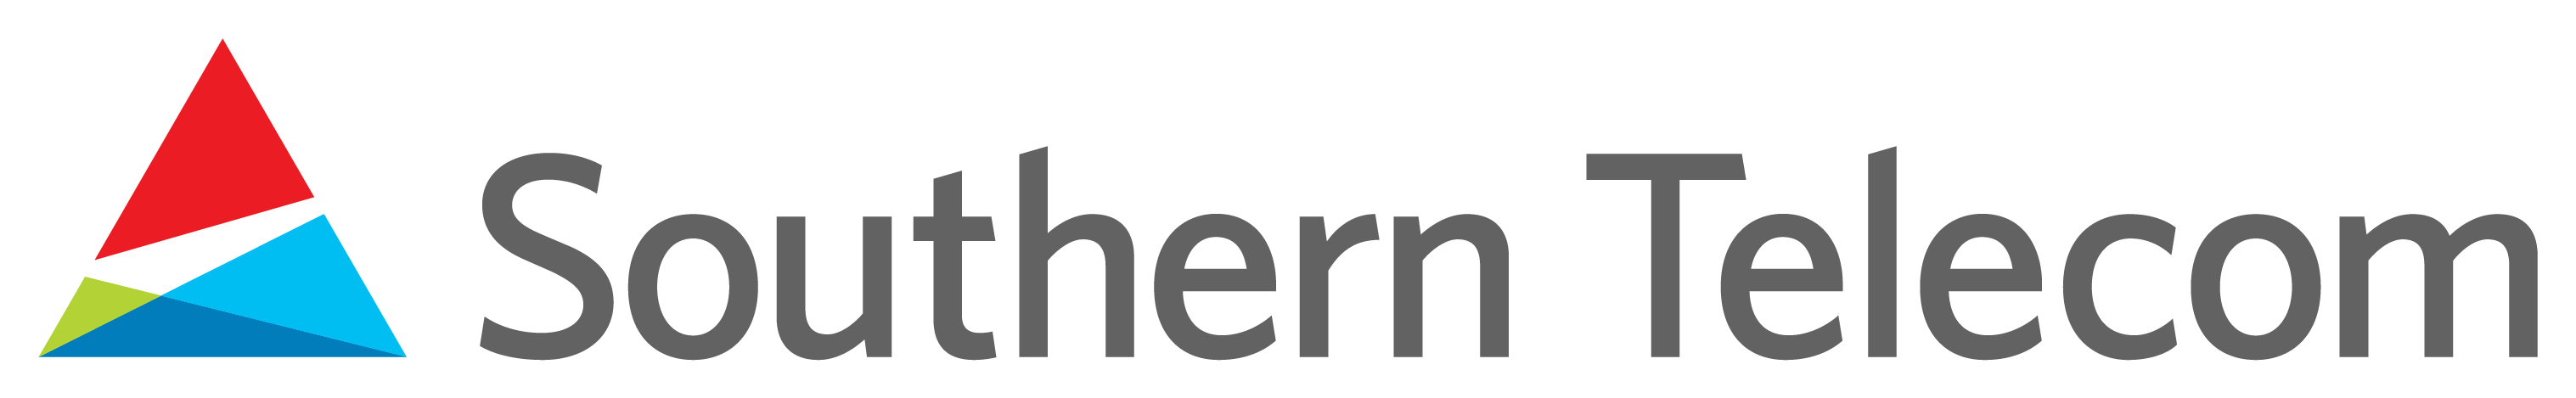 Southern Telecom Logo